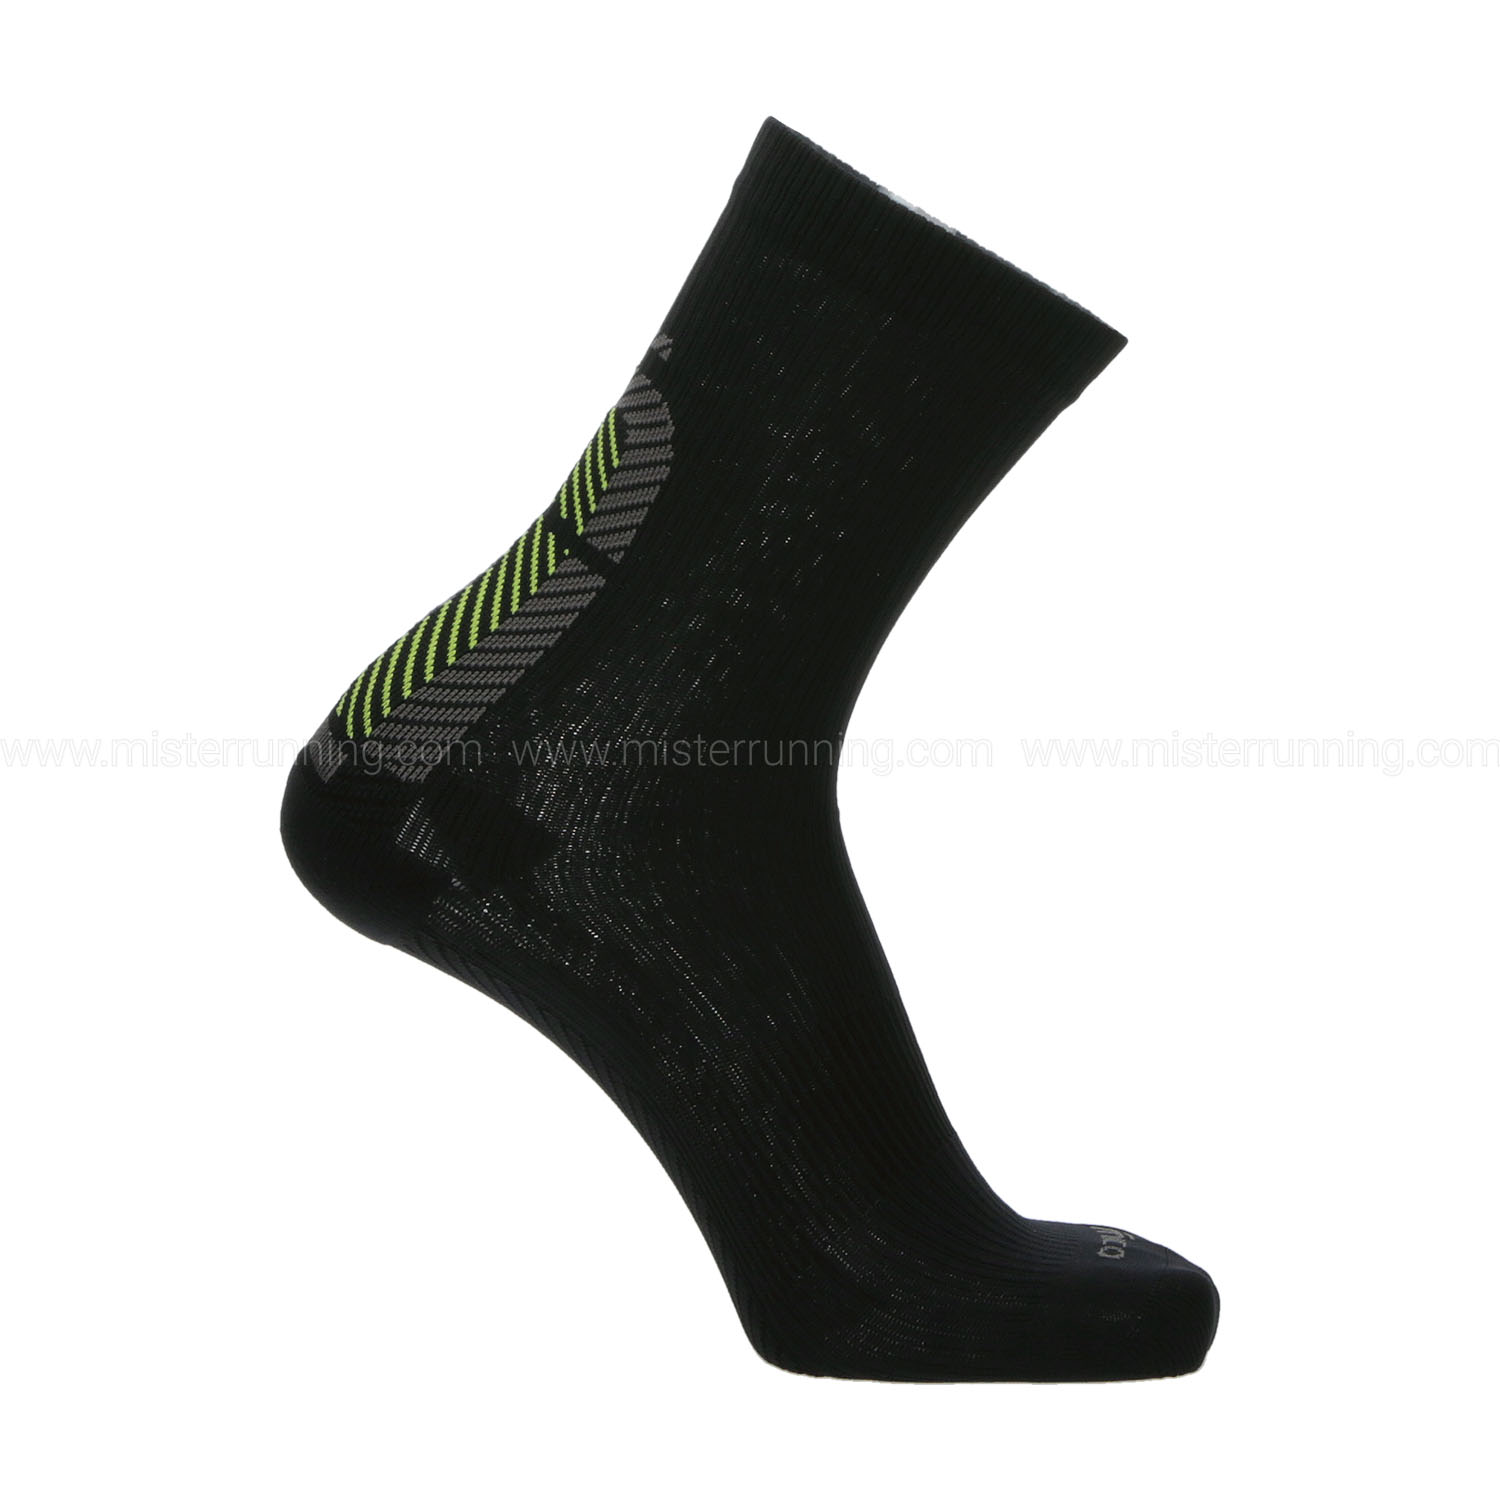 Mico Pro X-Performance Light Weight Socks - Nero/Giallo Fluo